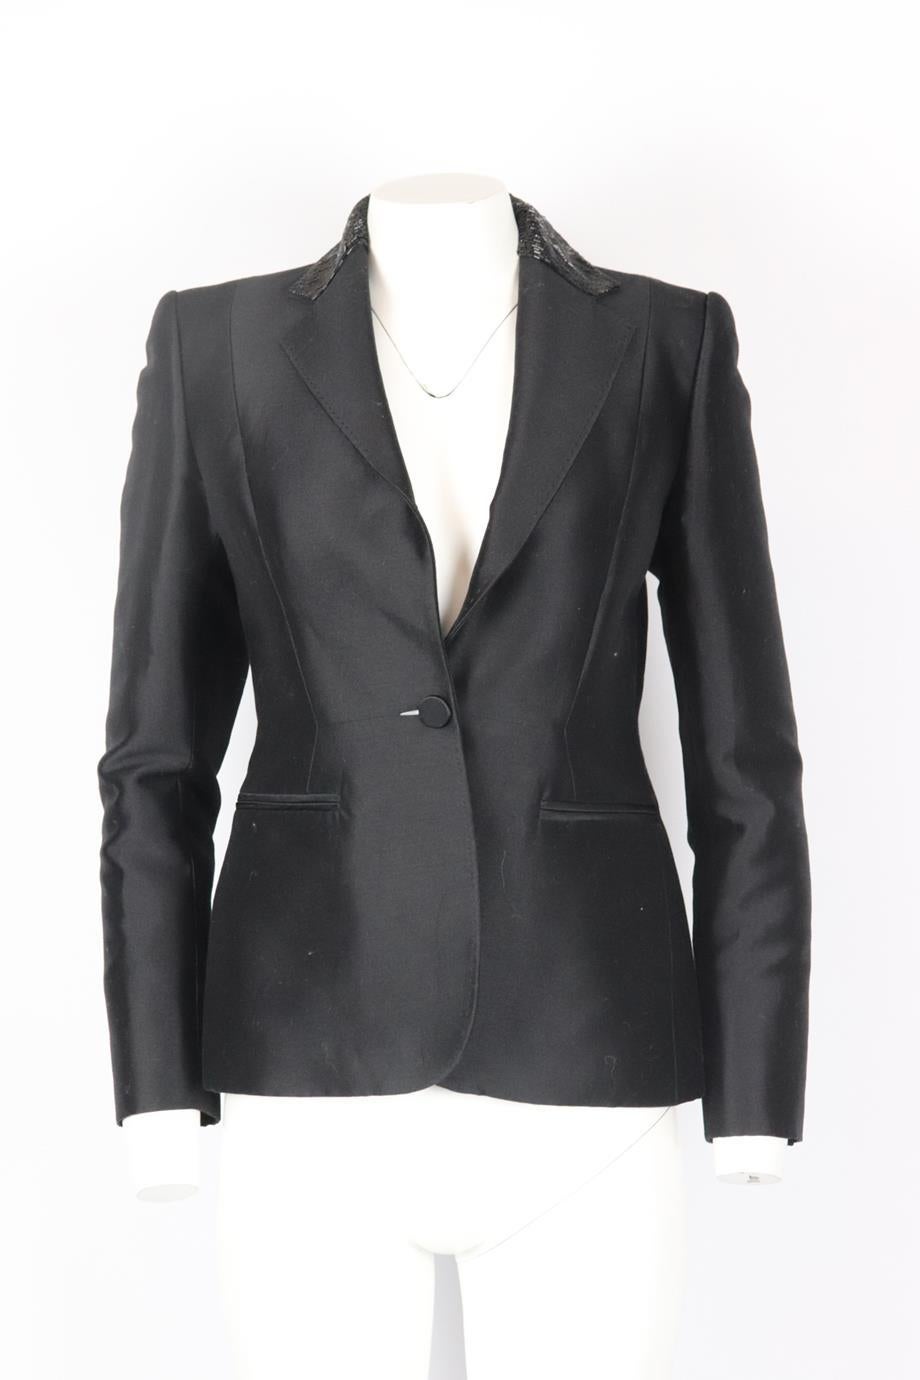 Carolina Herrera bead embellished cotton and silk blend blazer. Black. Long sleeve, v-neck. Button fastening at front. 90% Cotton, 10% silk; lining: 100% silk. Size: US 4 (UK 8, FR 36, IT 40). Shoulder to shoulder: 15.5 in. Bust: 33.6 in. Waist: